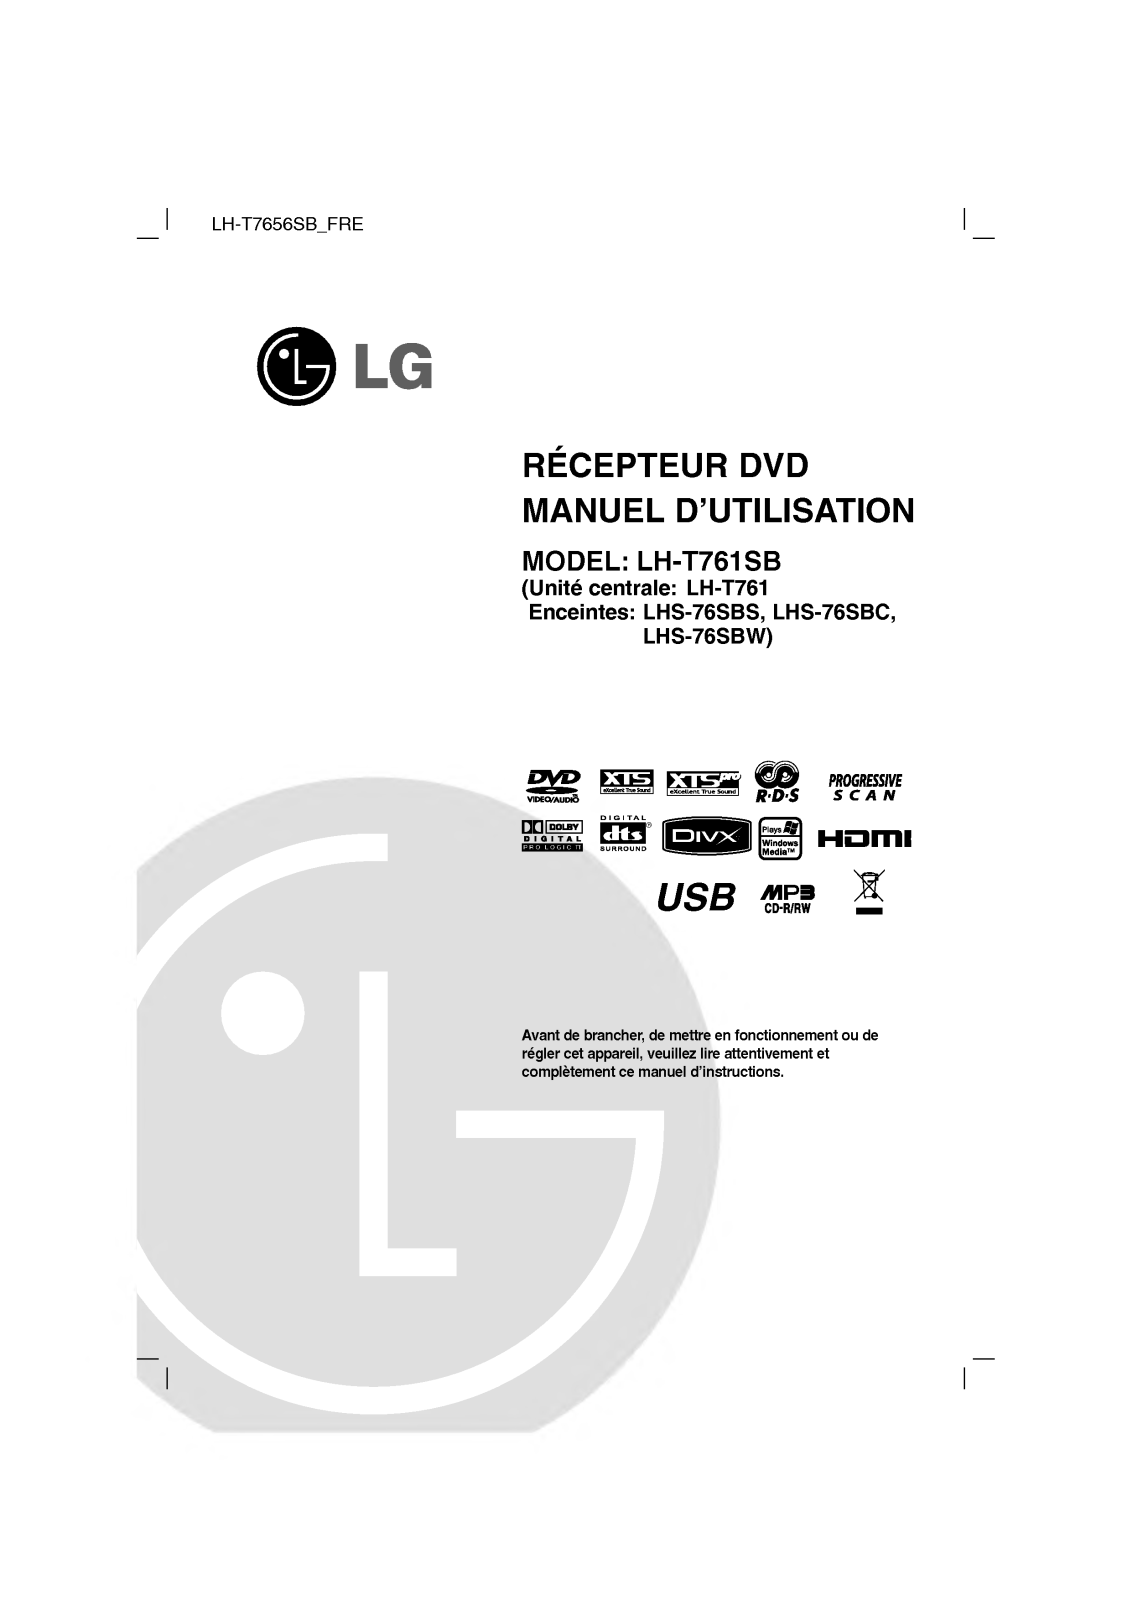 LG LH-T761SB User Manual